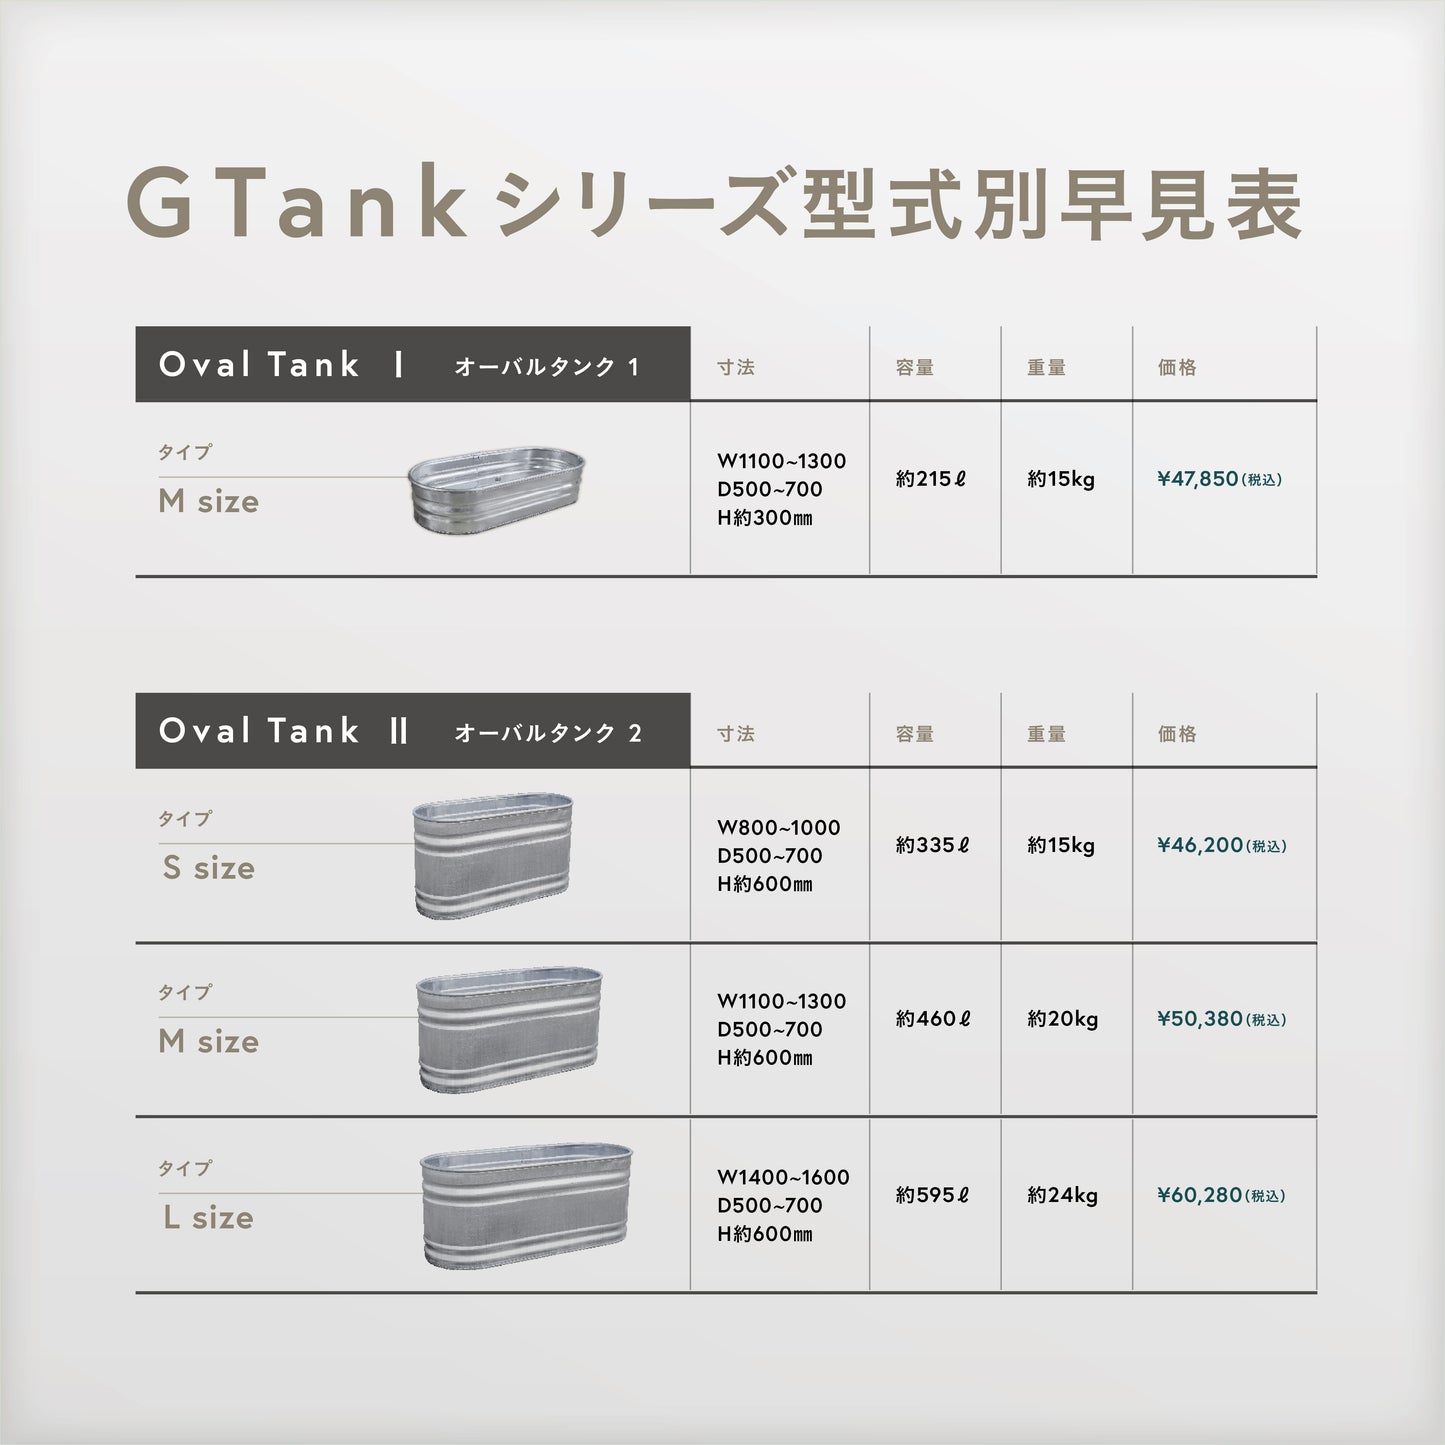 Gタンク／オーバルタンク Ⅰ　M size